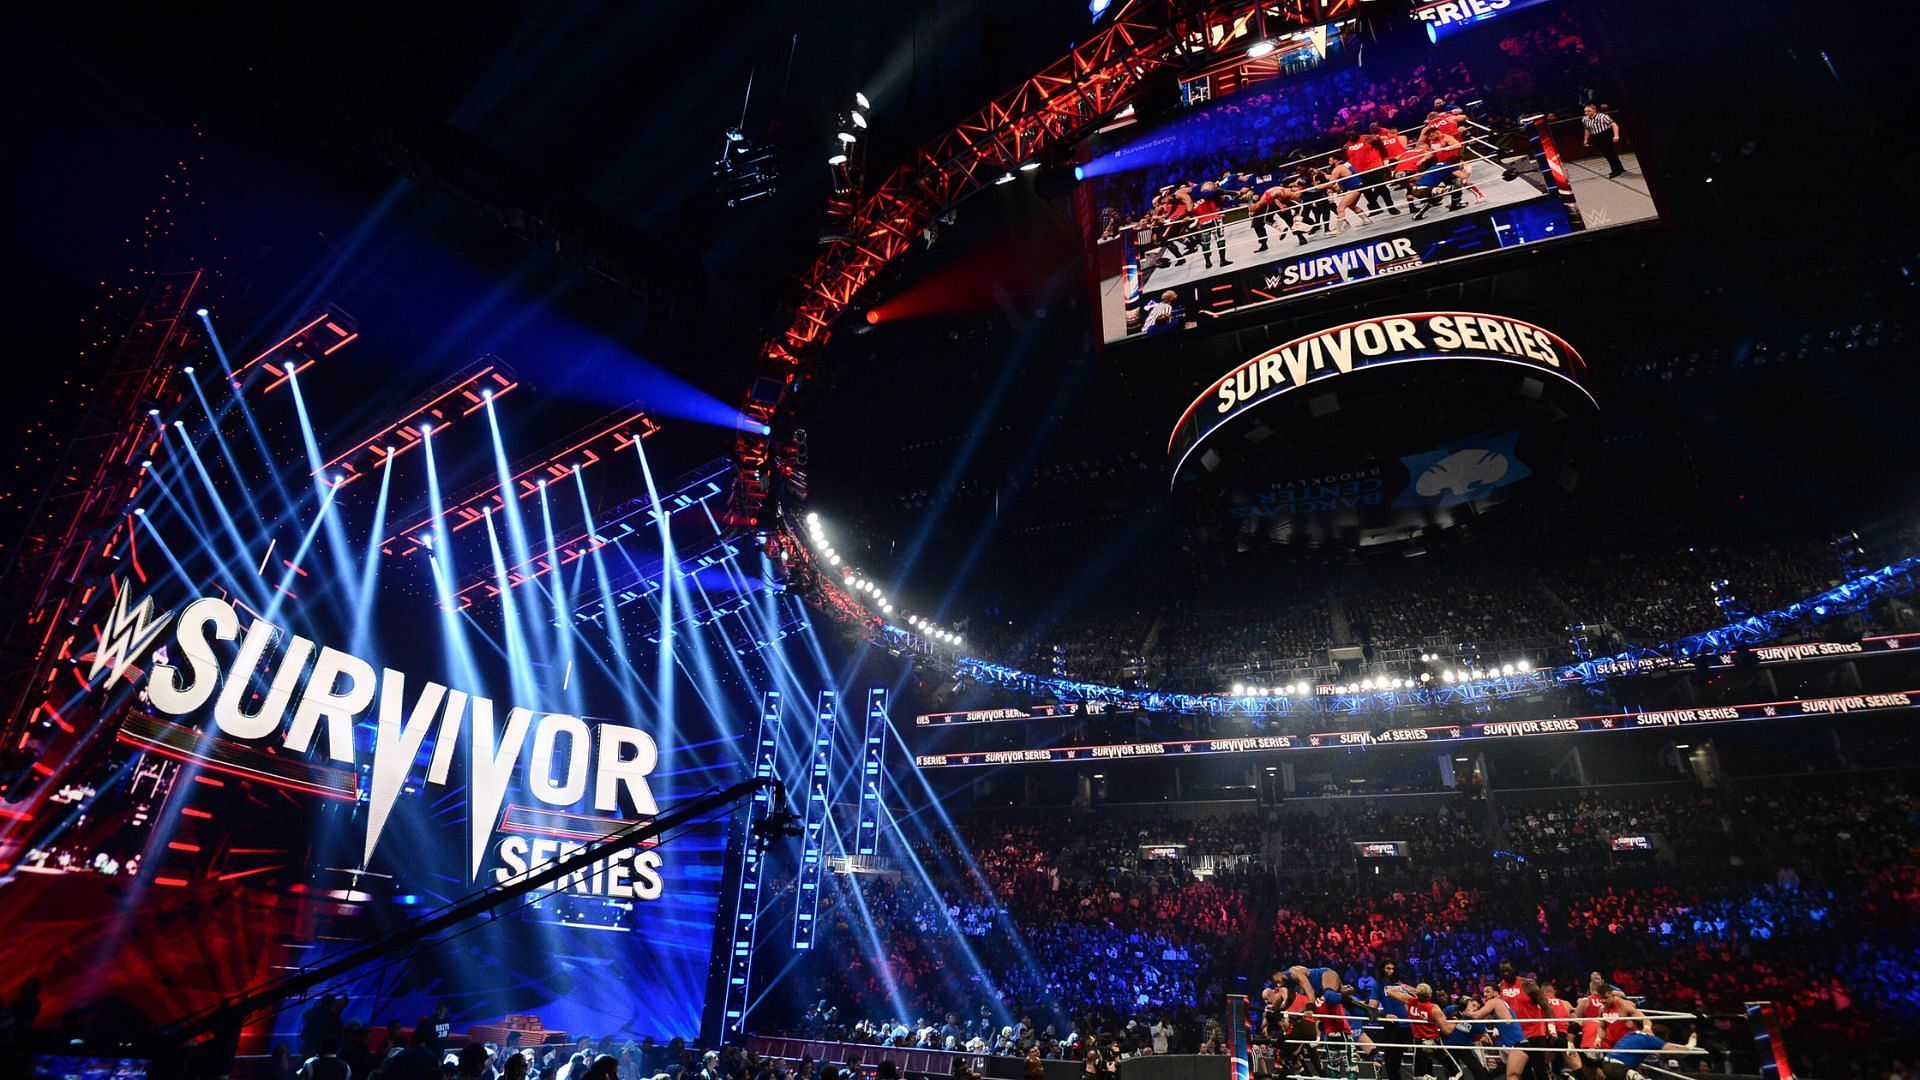 WWE Survivor Series: WarGames will be held this Saturday, November 26